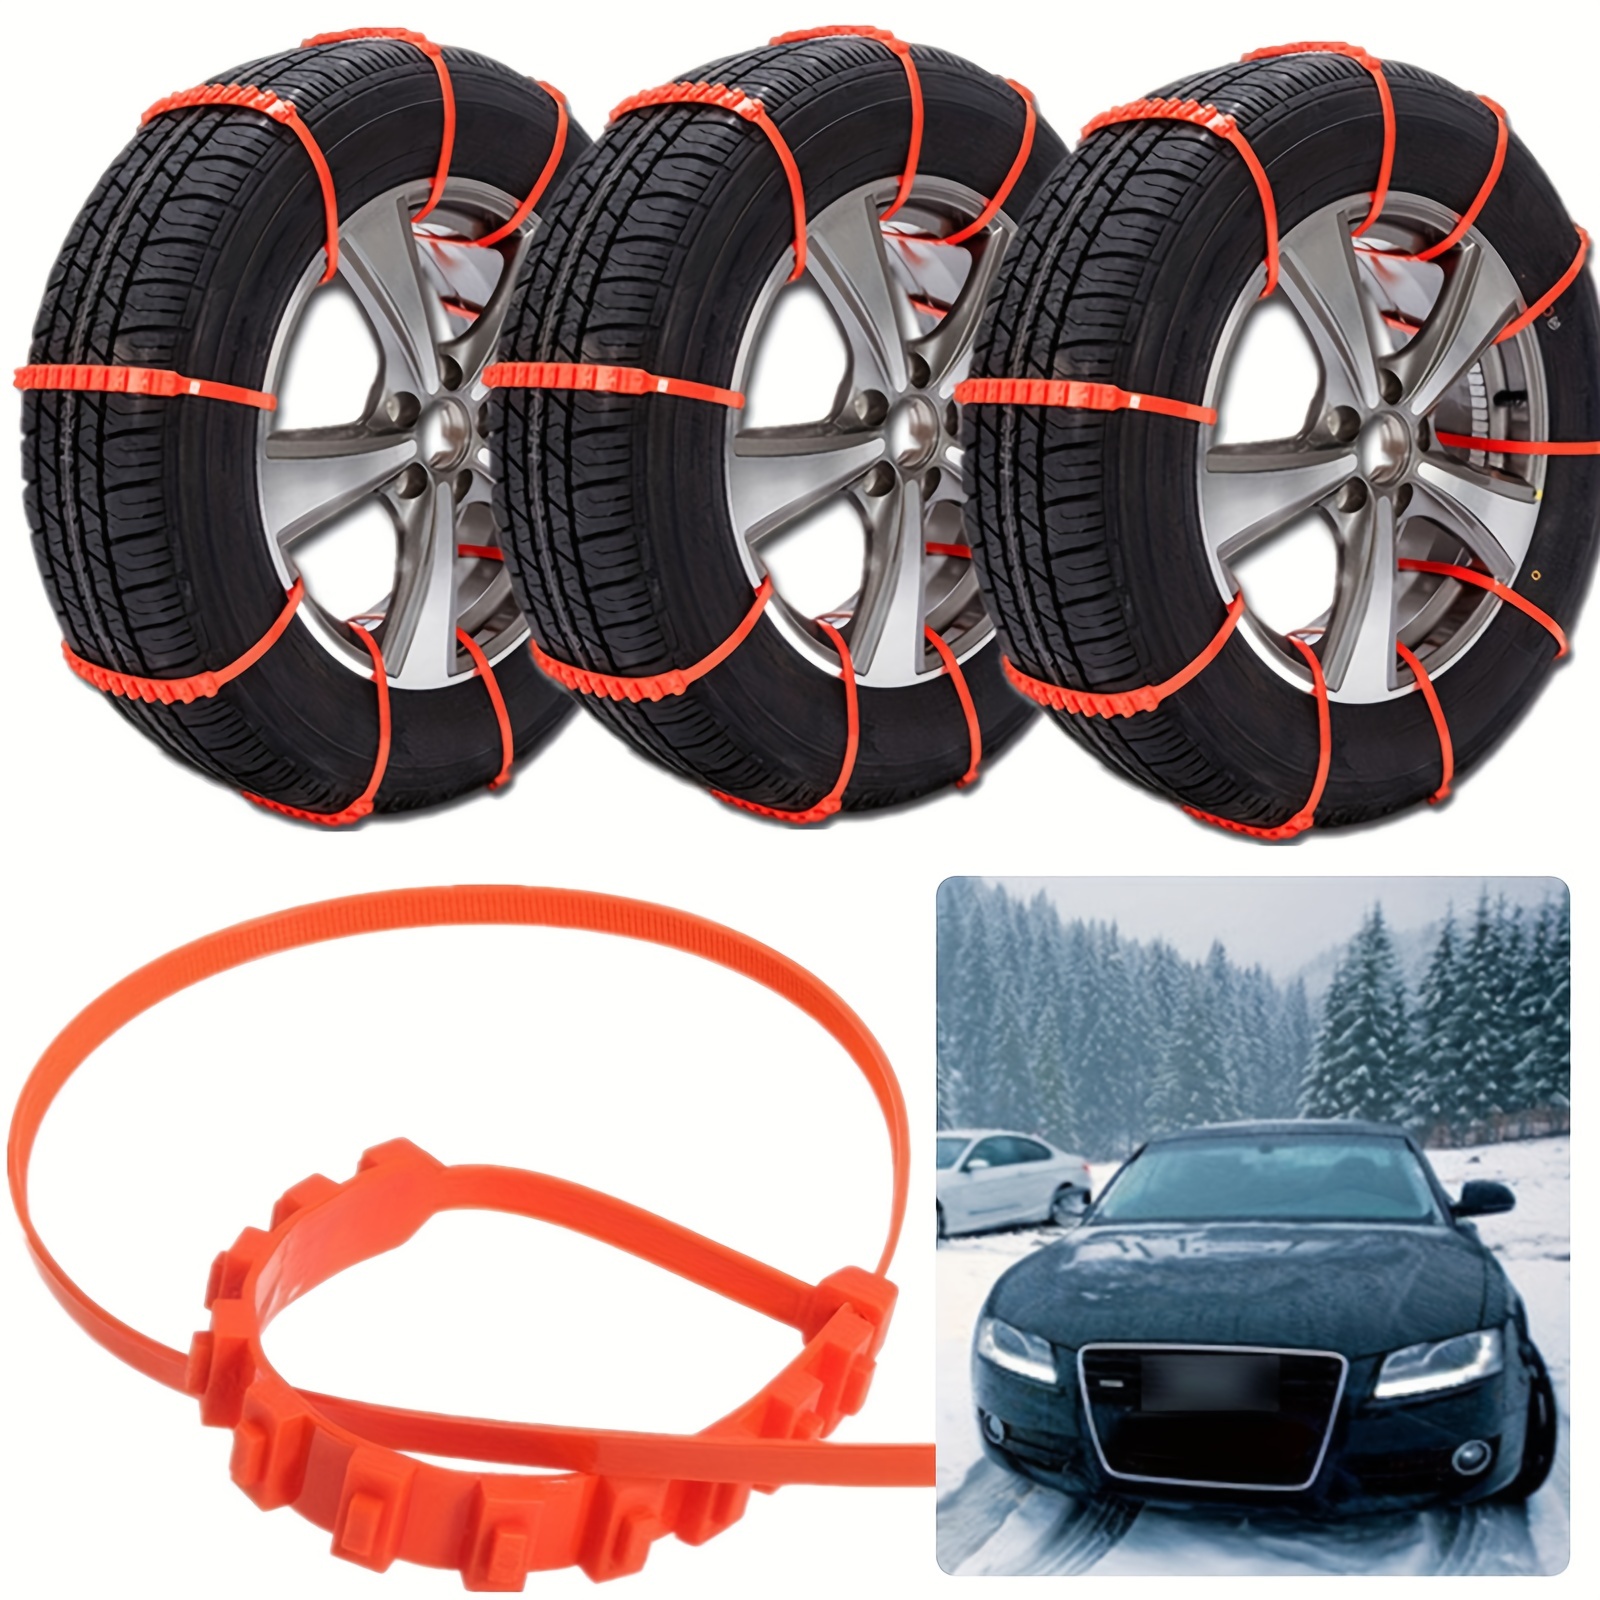 Universal Car Styling Chains Adjustable Nylon SUV Wheel Tires Snow Chain  (10pcs)